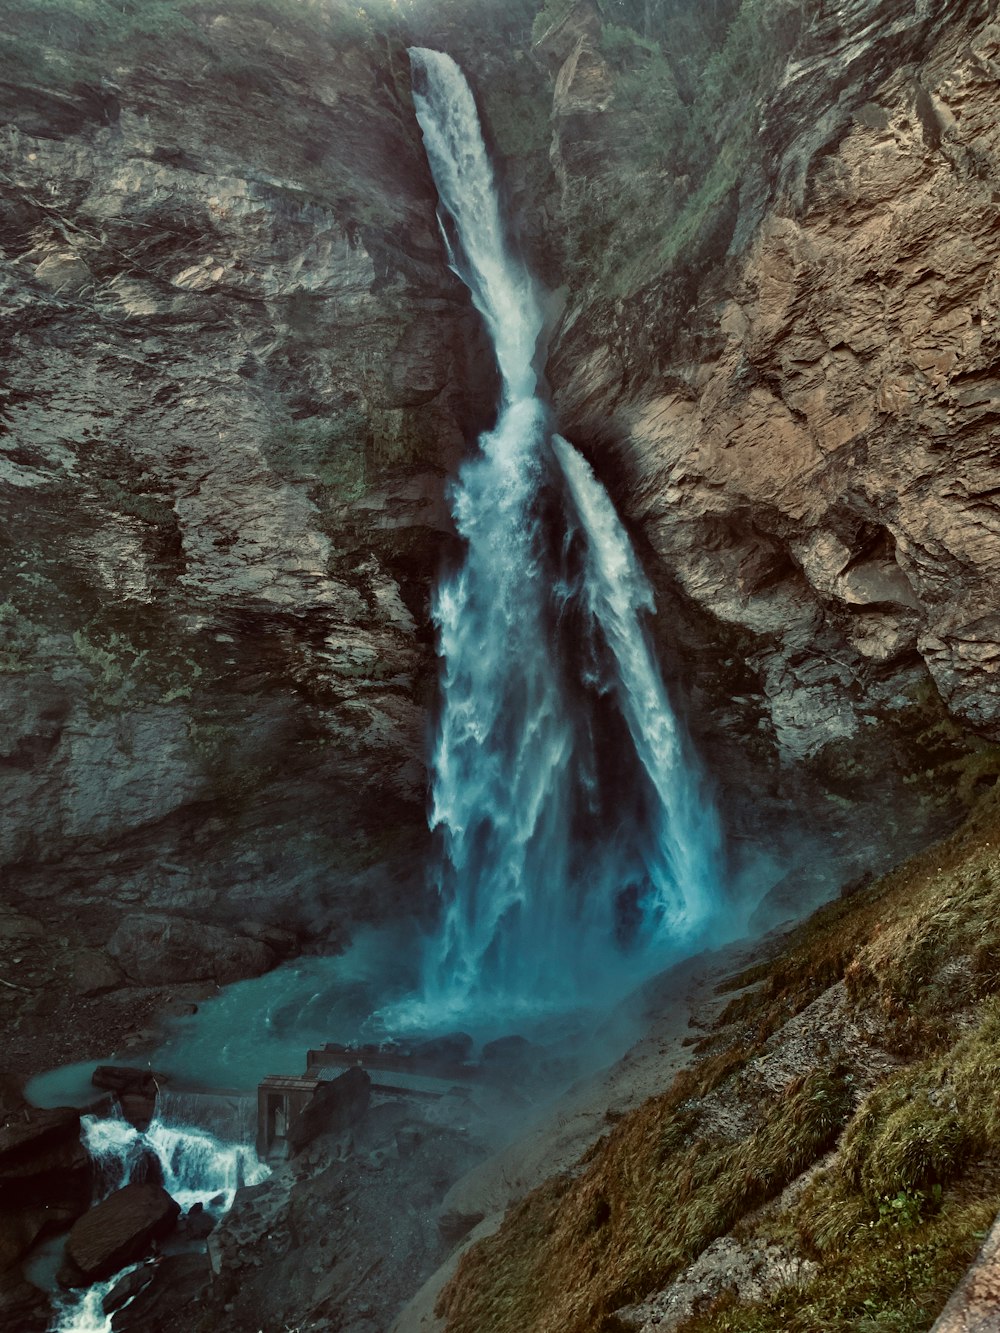 waterfalls on rocky mountain during daytime